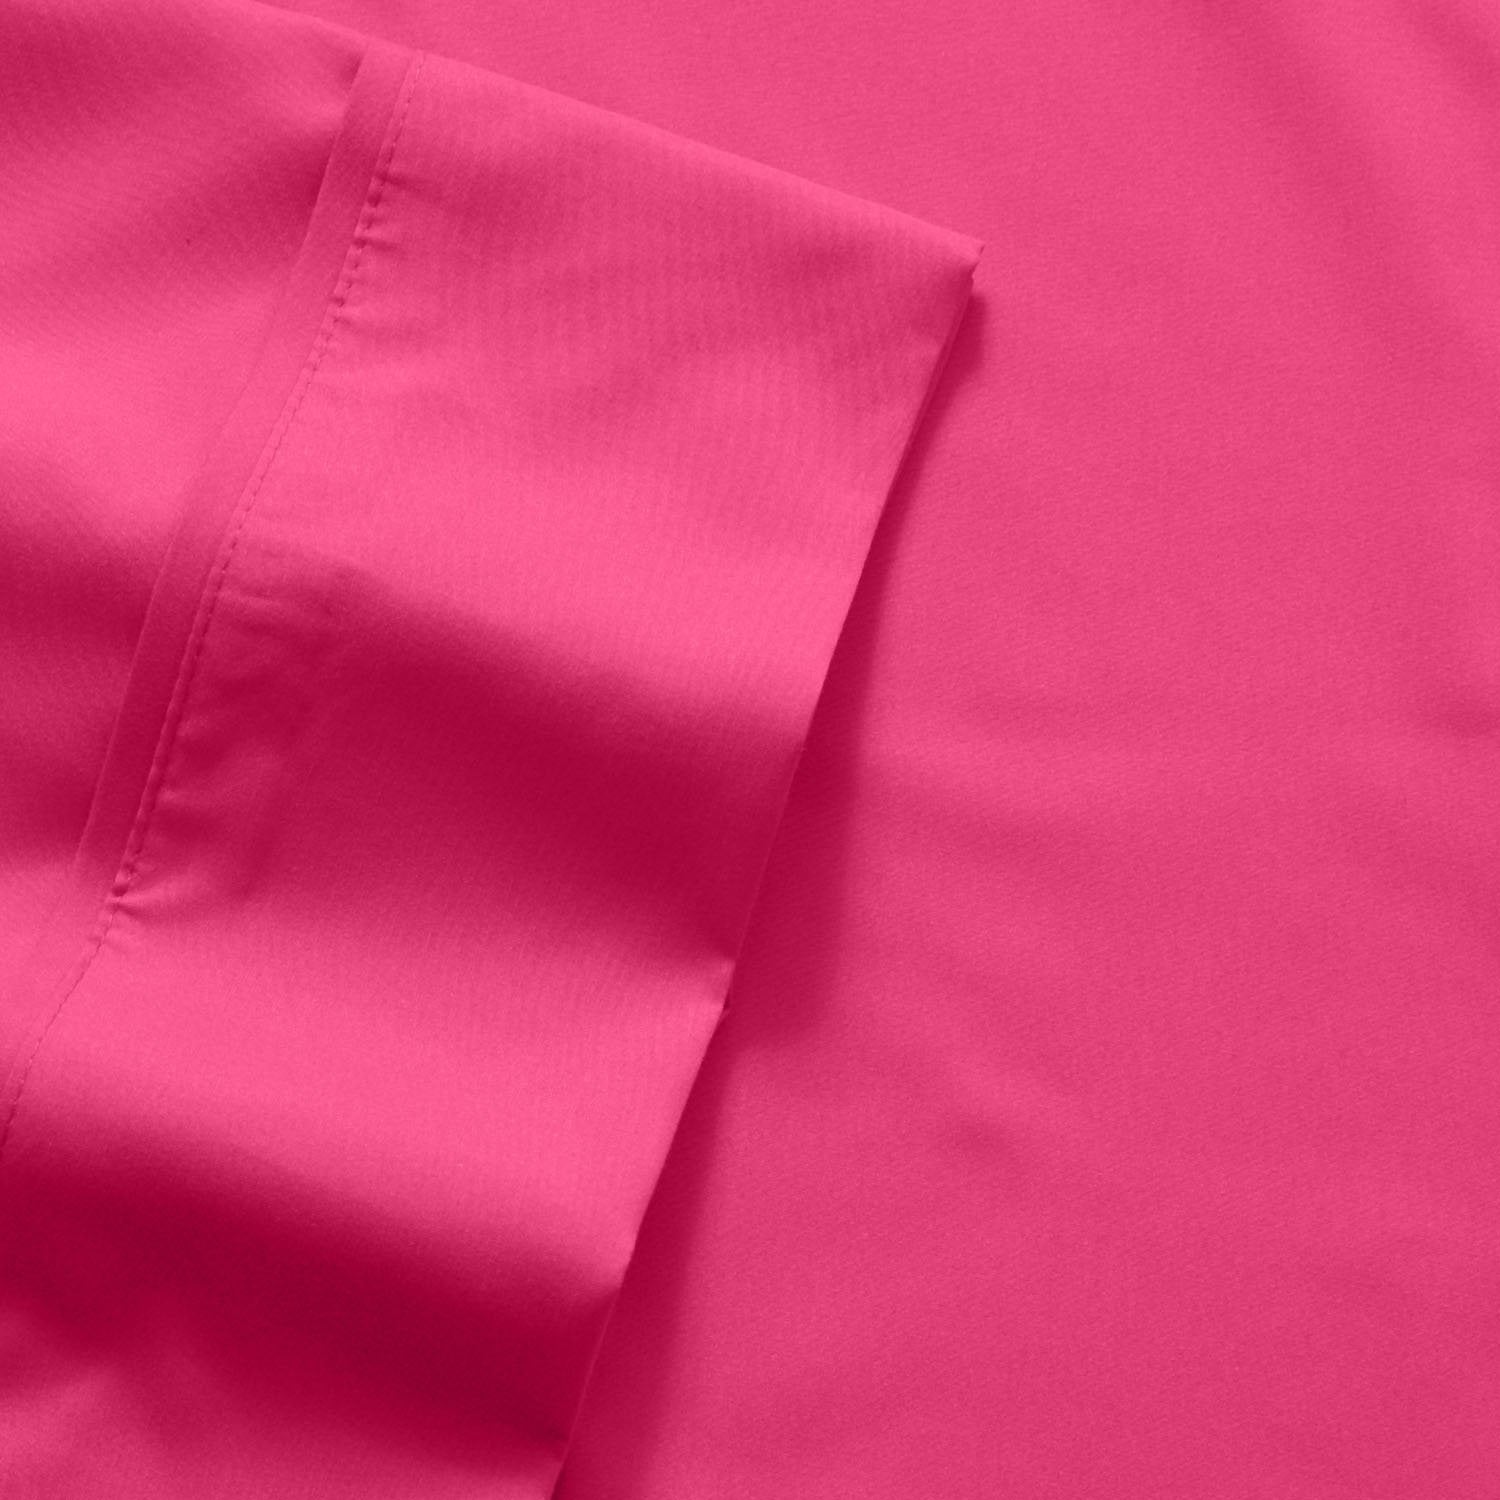 Deluxe 6-Piece Bed Sheet Set (Fuchsia) - Fabric